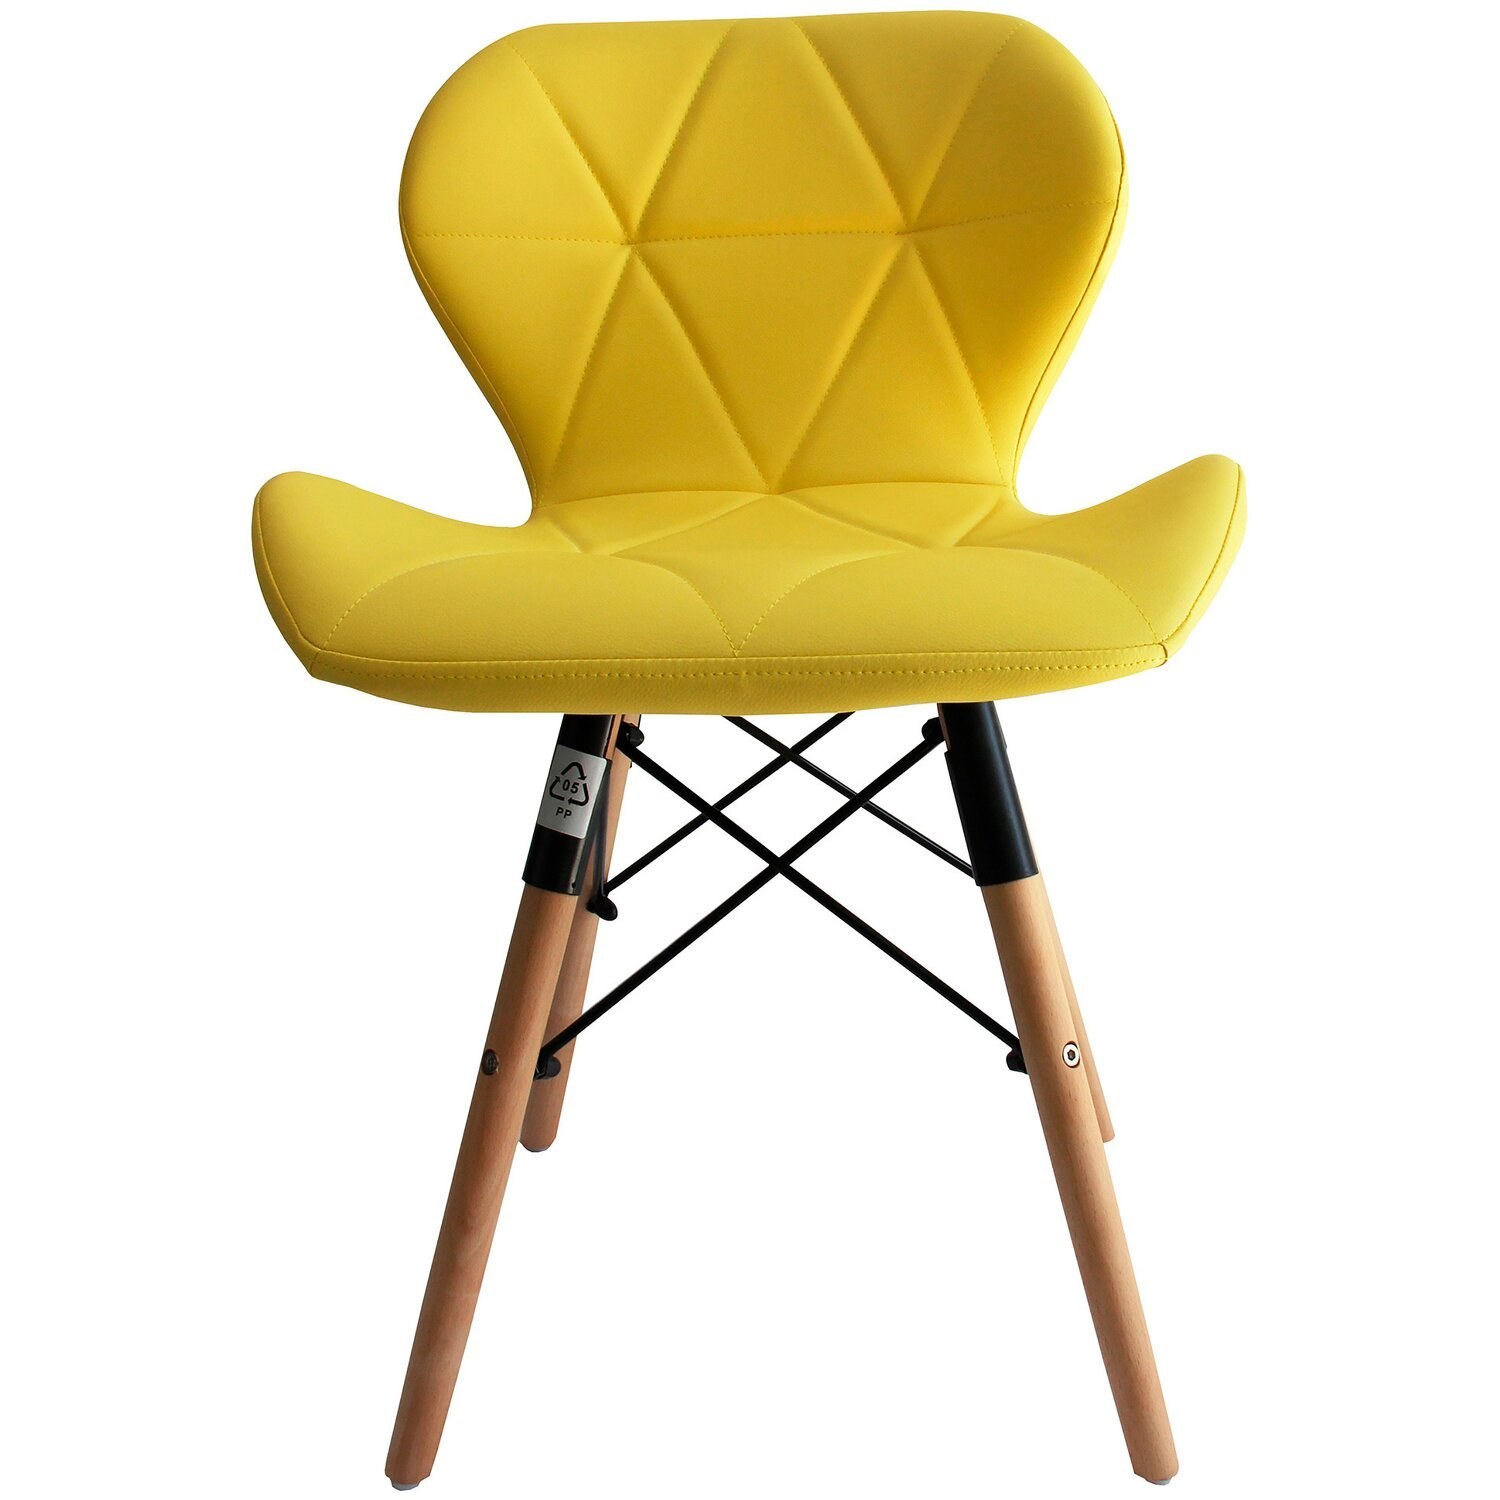 Yellow chair. Стул Еамес Баттерфляй. Стул обеденный Eames Butterfly. Стулья Эймс Баттерфляй. Стул обеденный Eames Butterfly полиуретан желтый.